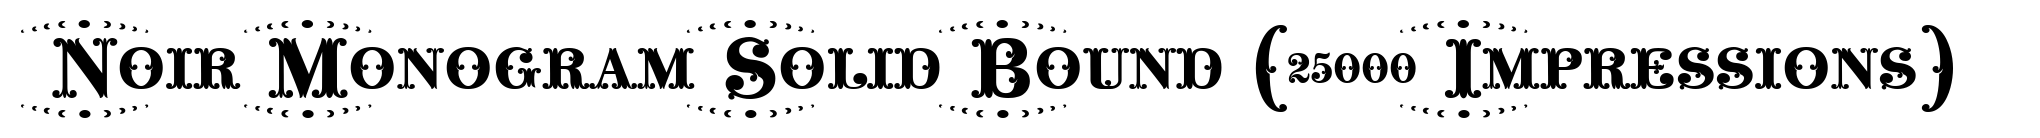 Noir Monogram Solid Bound (25000 Impressions) image